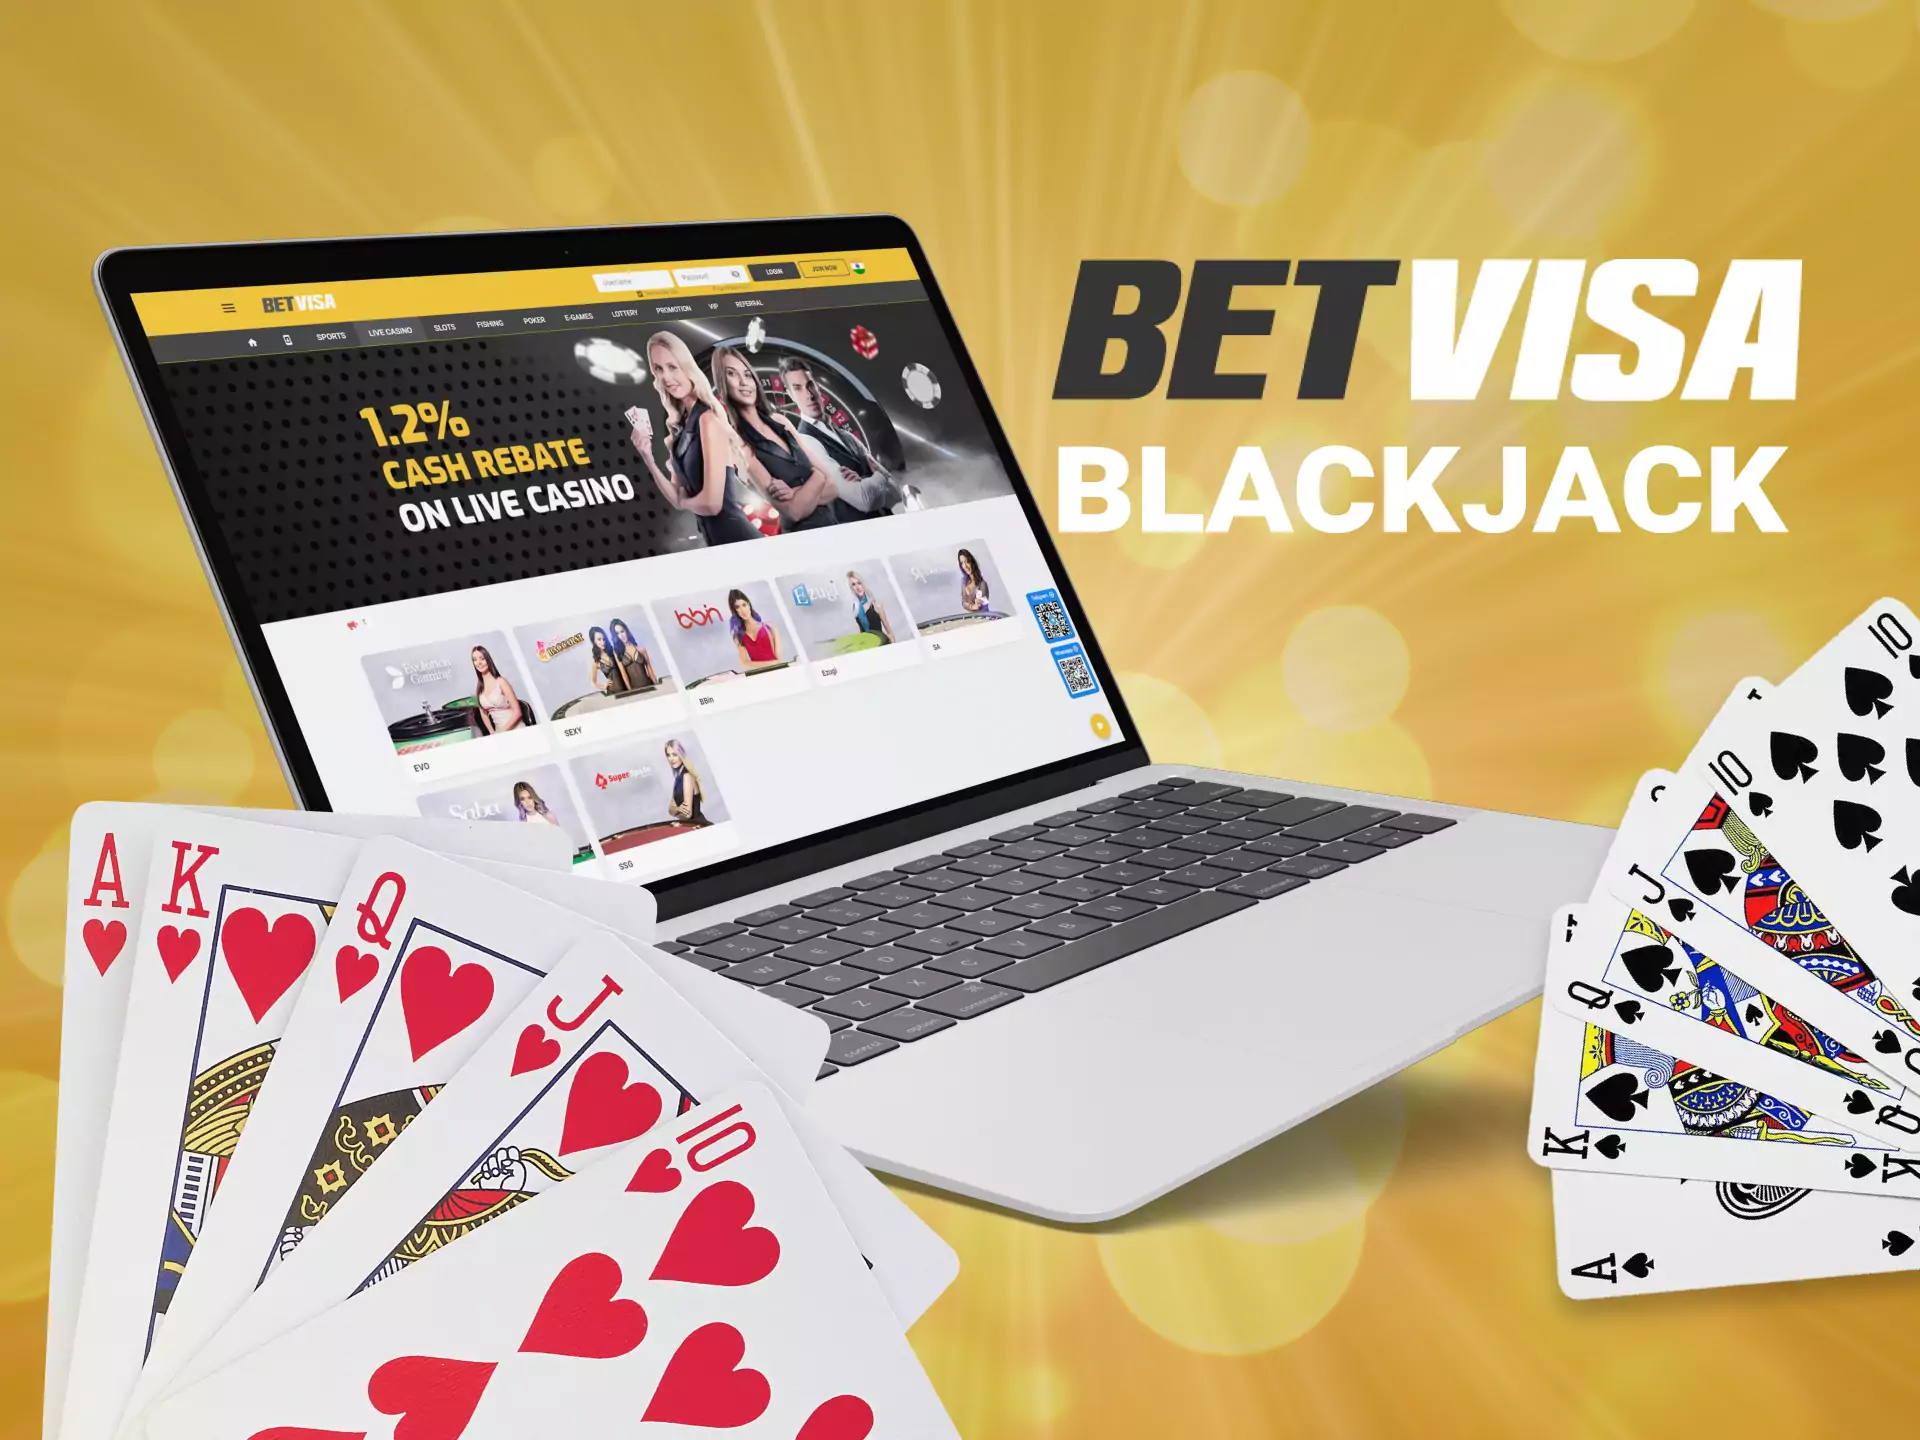 Blackjack is also provided in the Betvisa Casino.